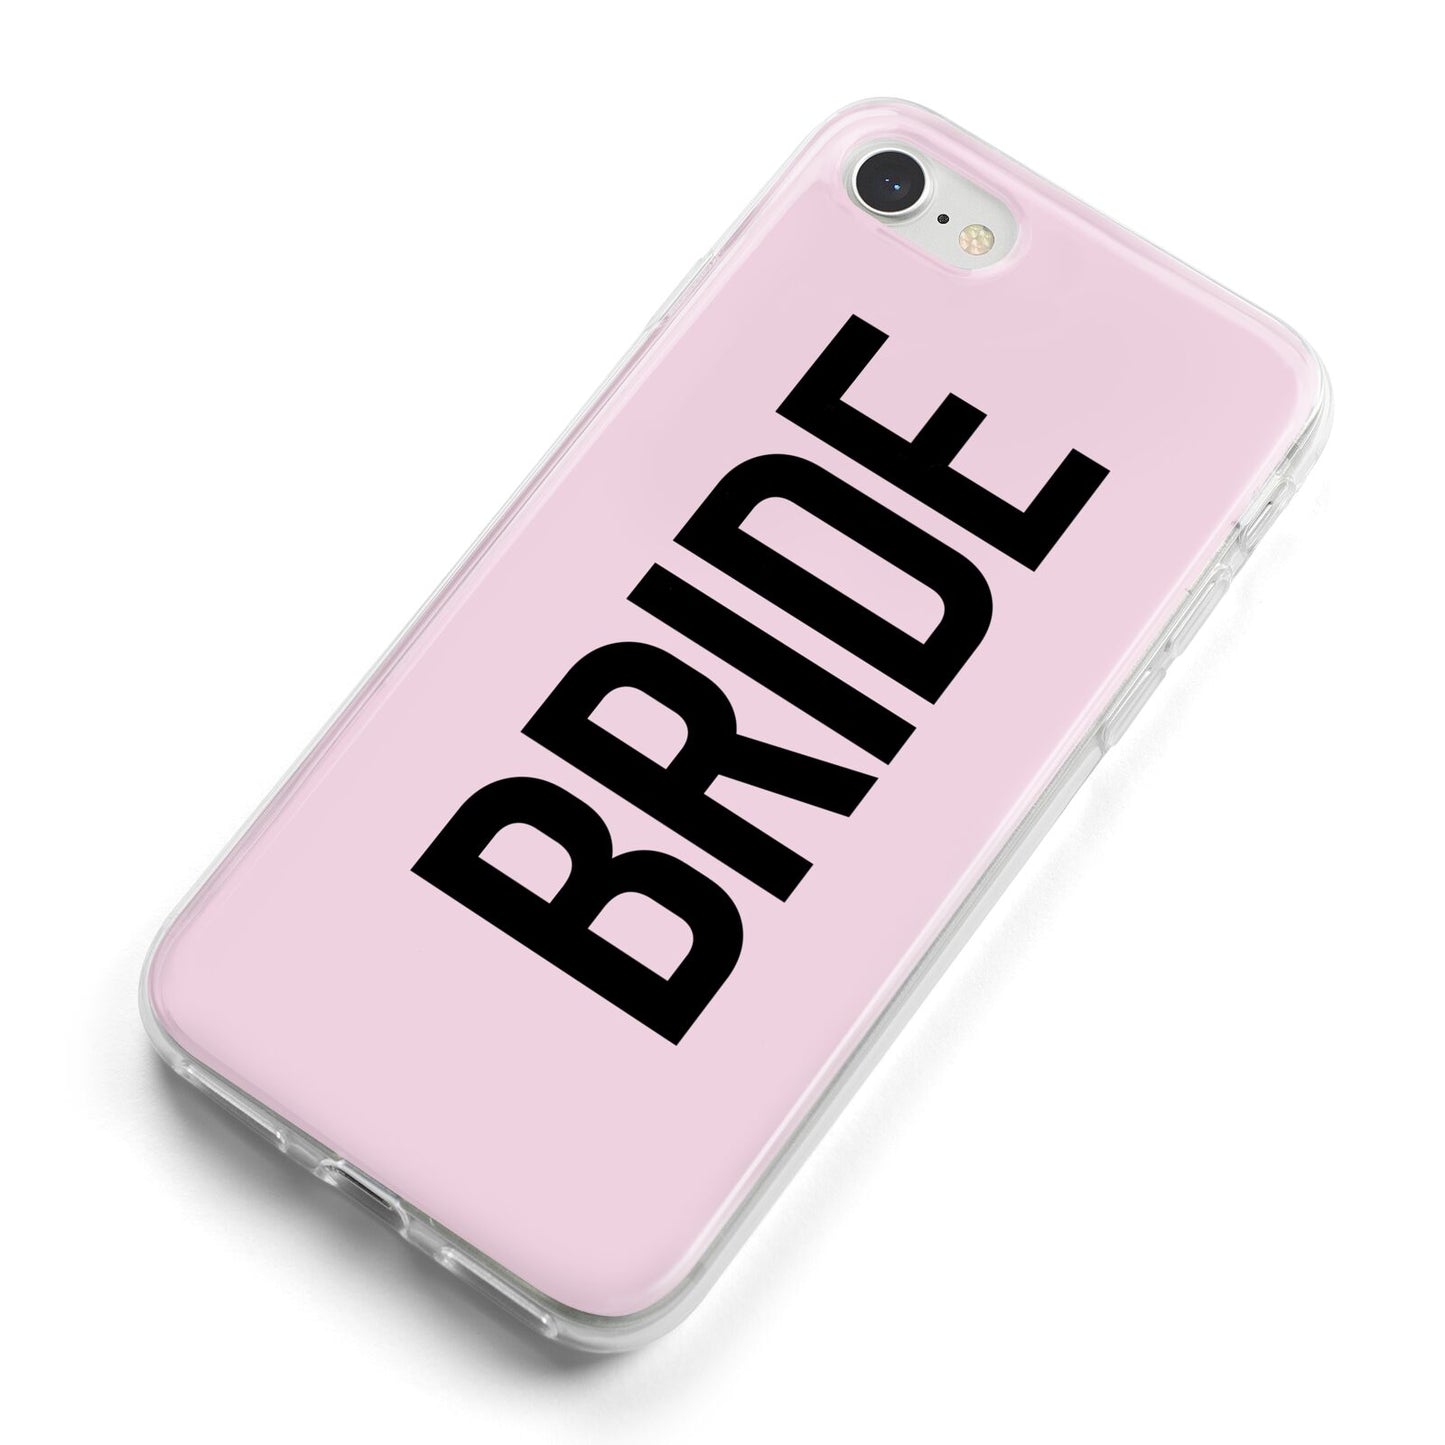 Bride iPhone 8 Bumper Case on Silver iPhone Alternative Image